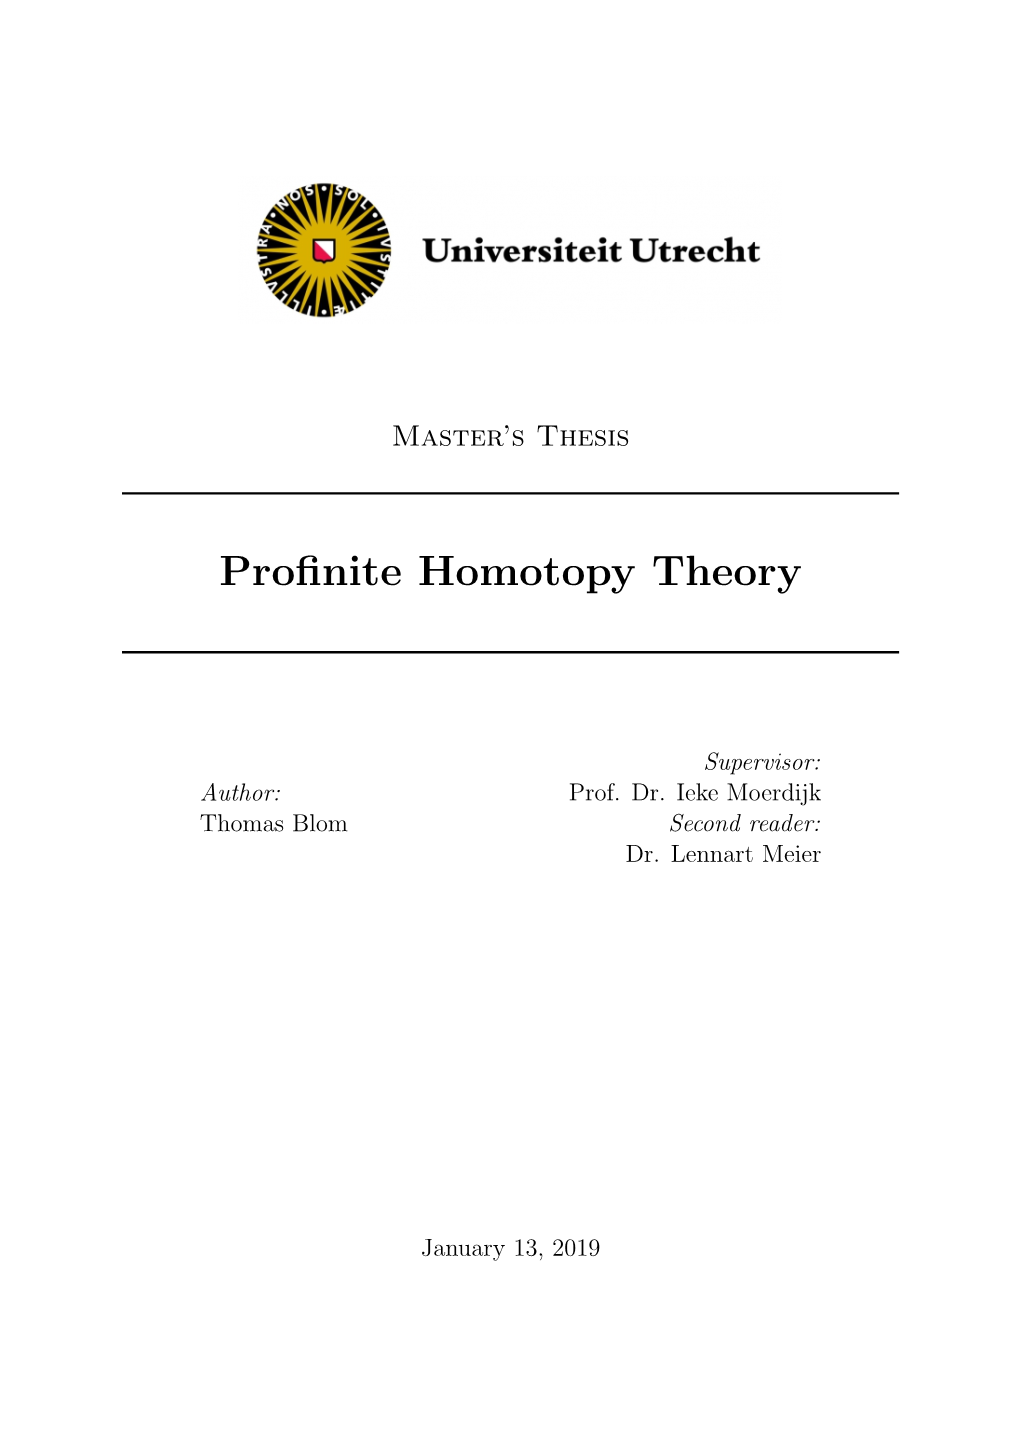 Profinite Homotopy Theory